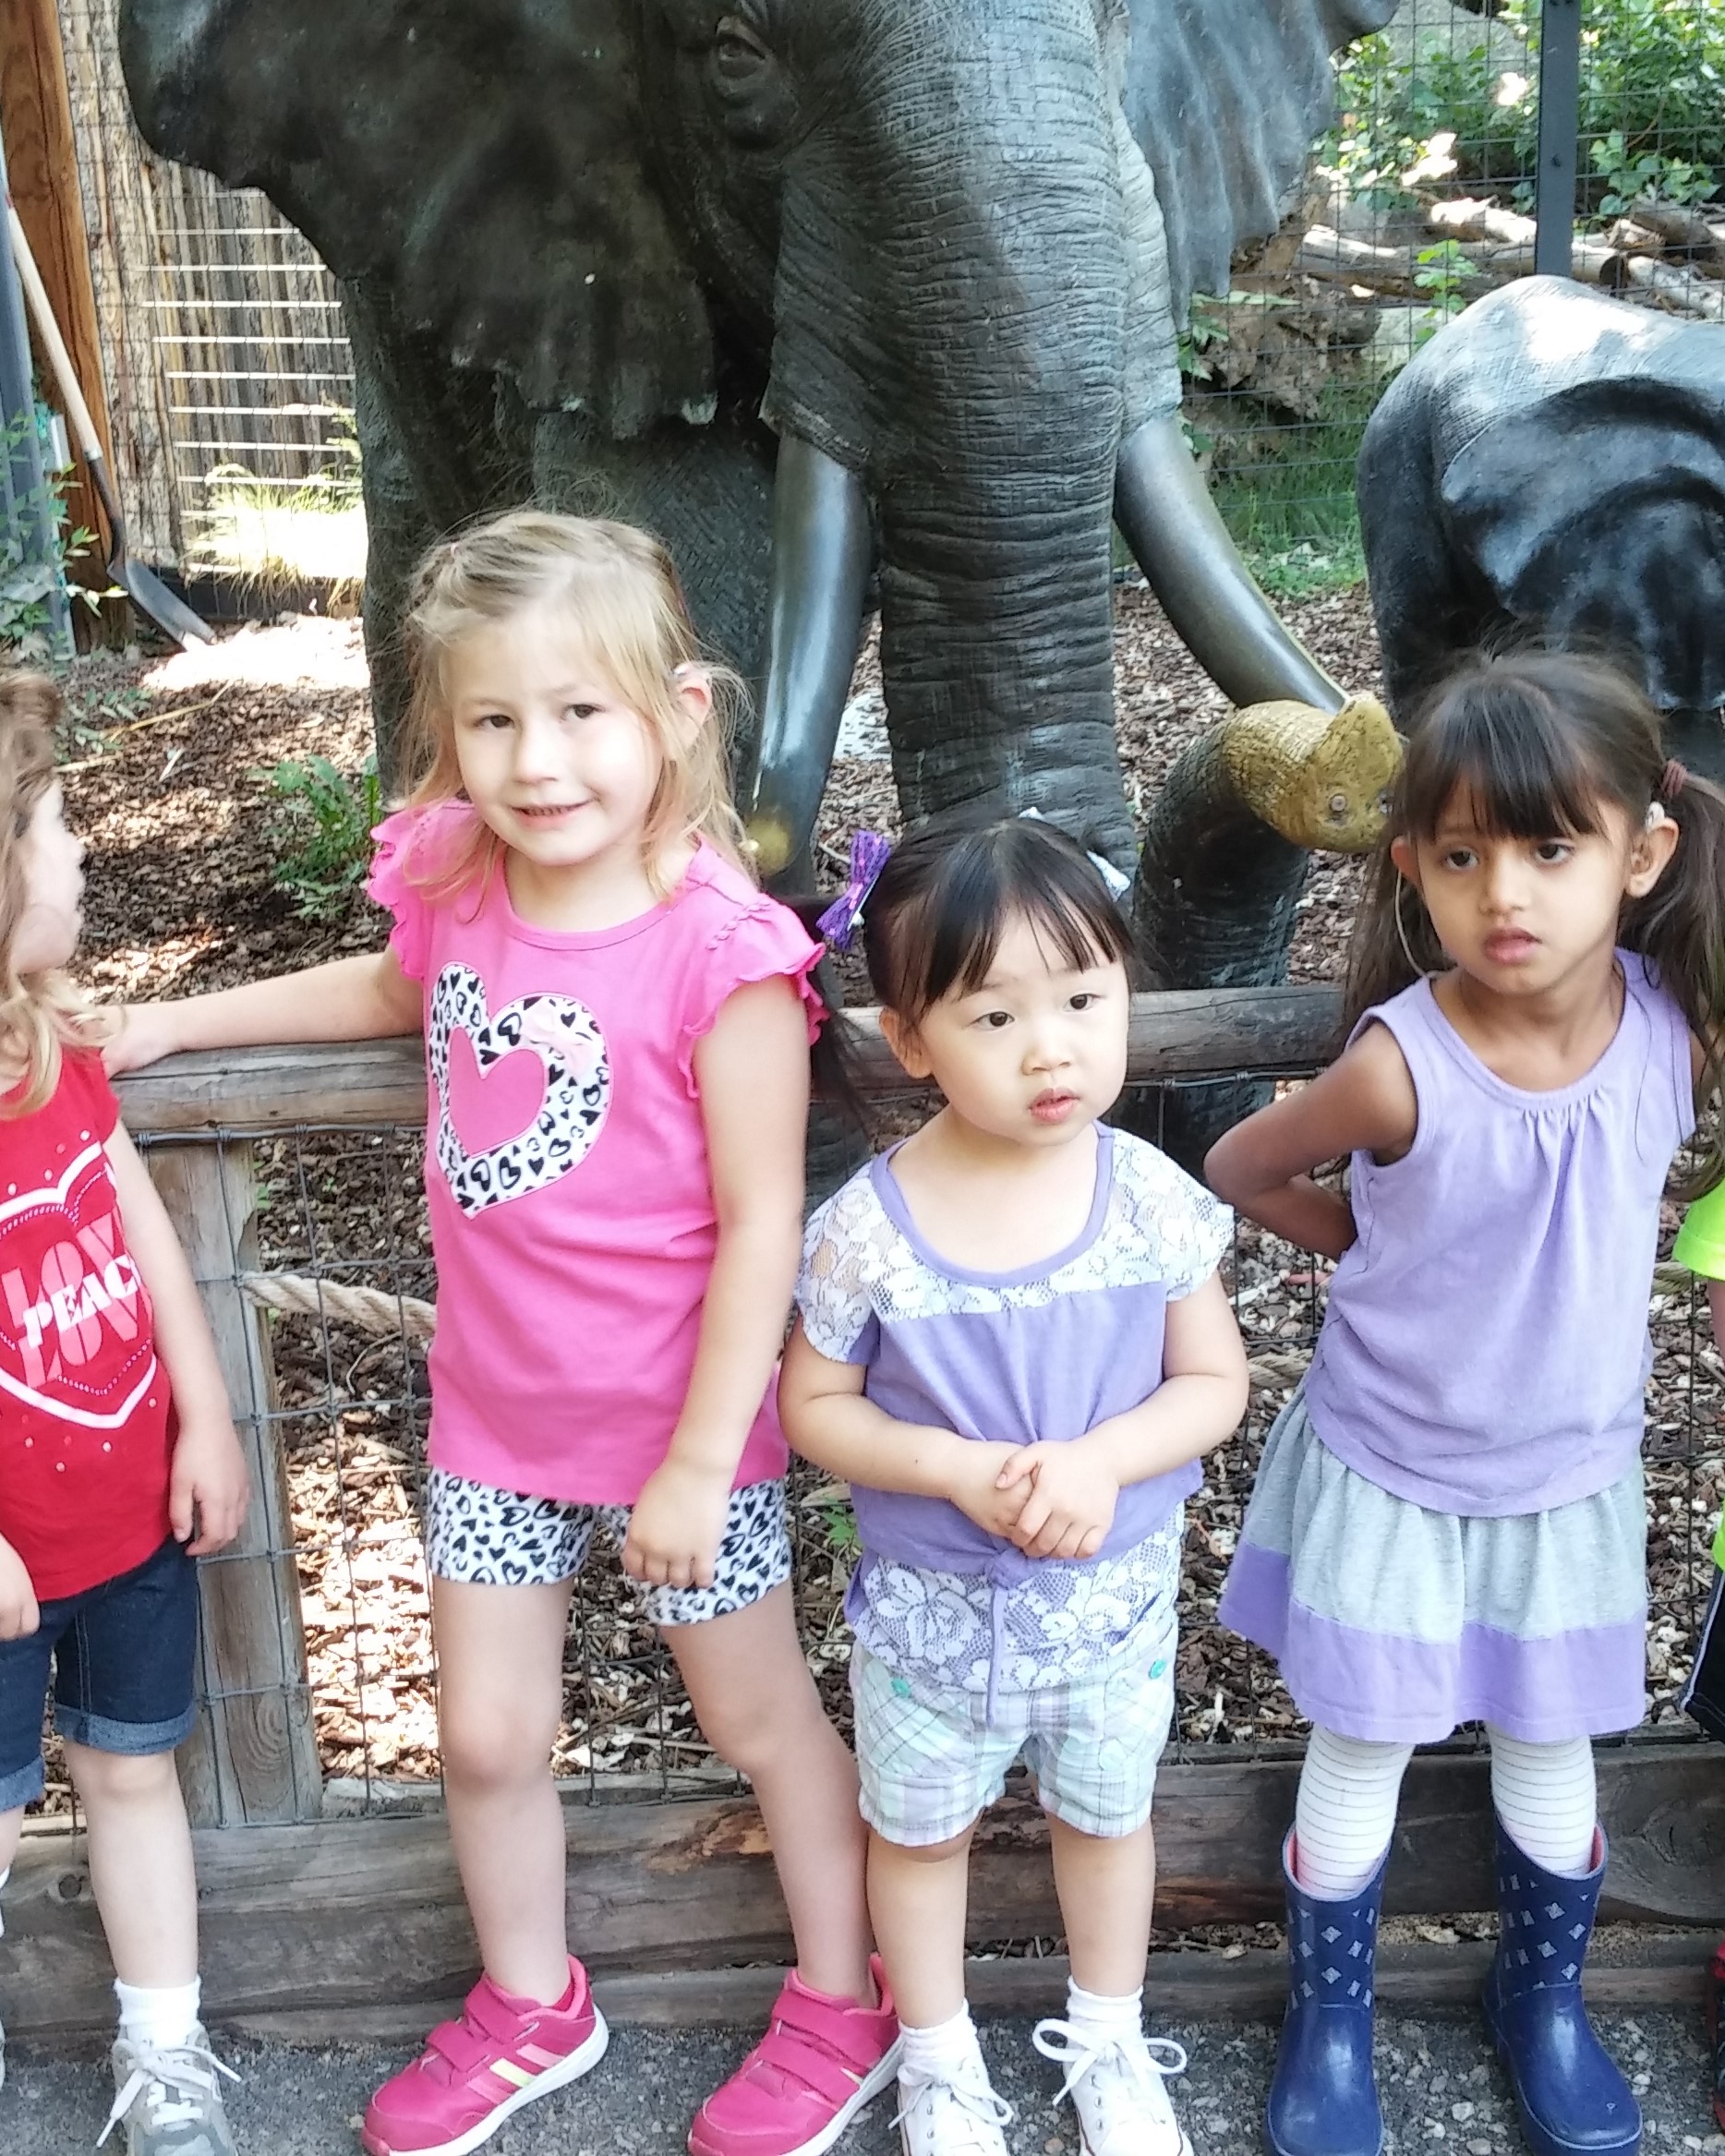 pre-school children posing in front of elephant statue